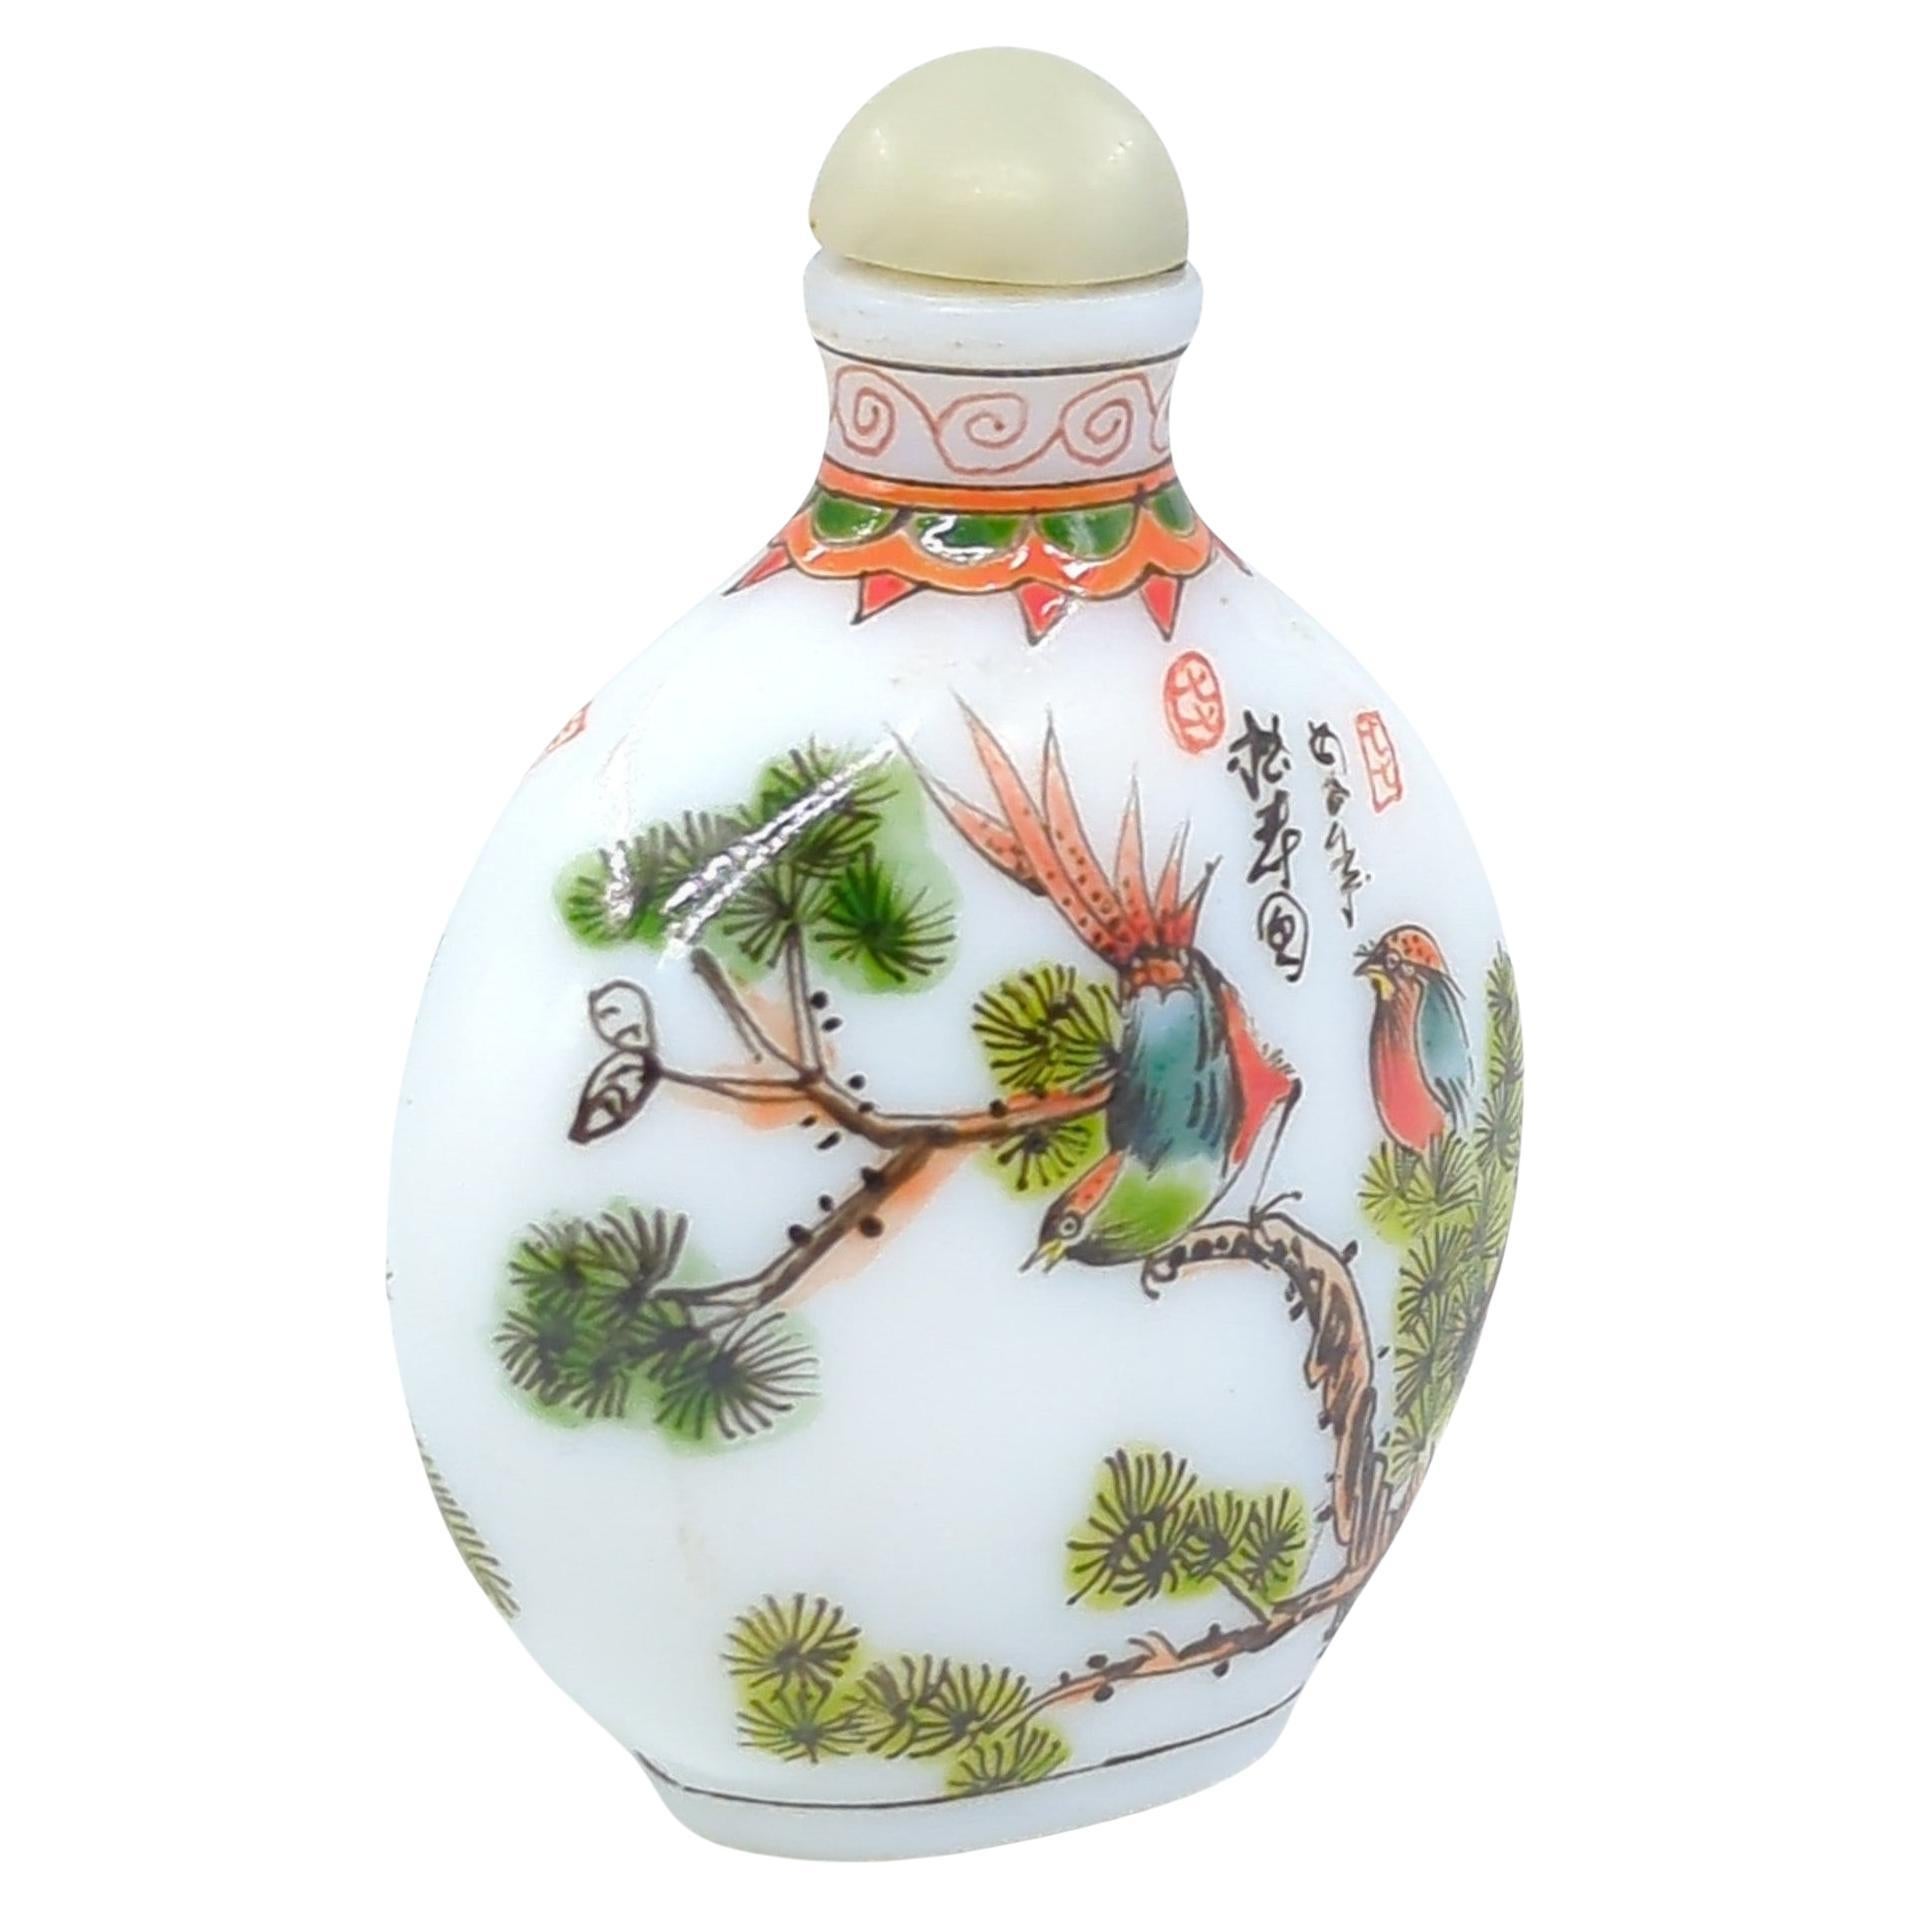 20th Century Chinese Enamel Milk Glass Snuff Bottle Guyuexuan Old Moon Pavillion Mark 20c For Sale